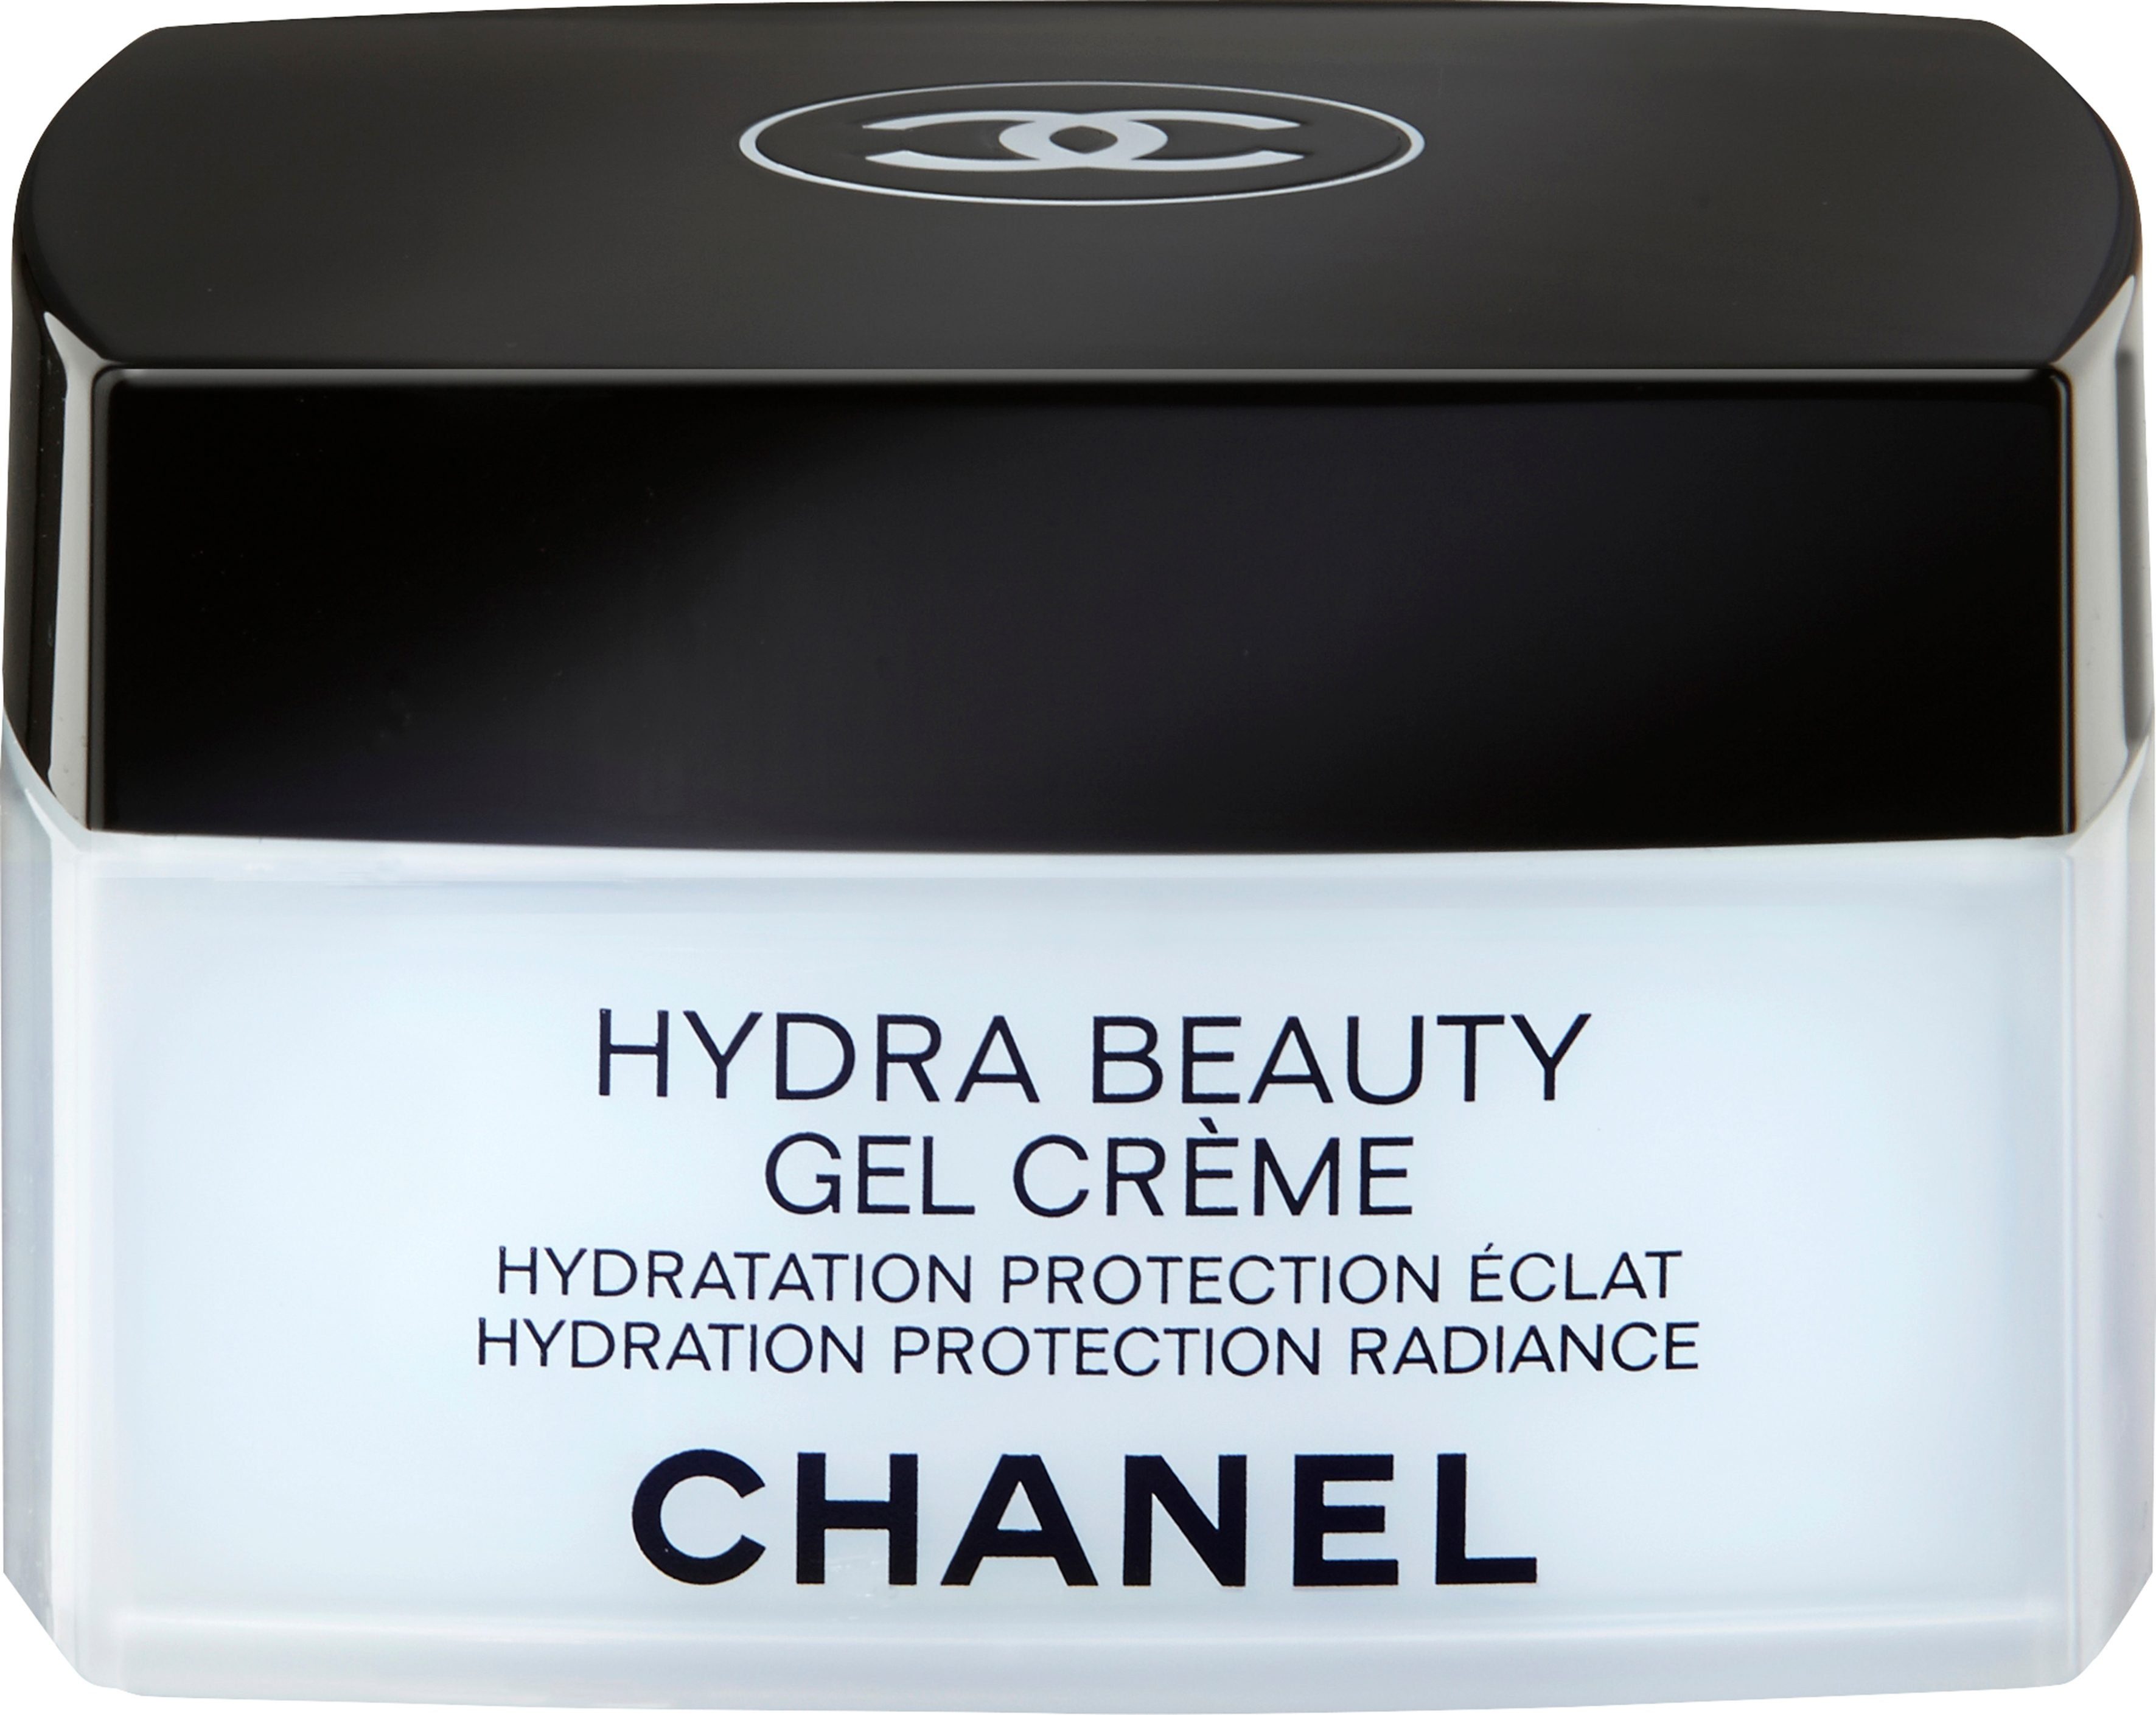 Moisturizing Face Cream Chanel Hydra Beauty Hydratation Protection Radiance  Creme